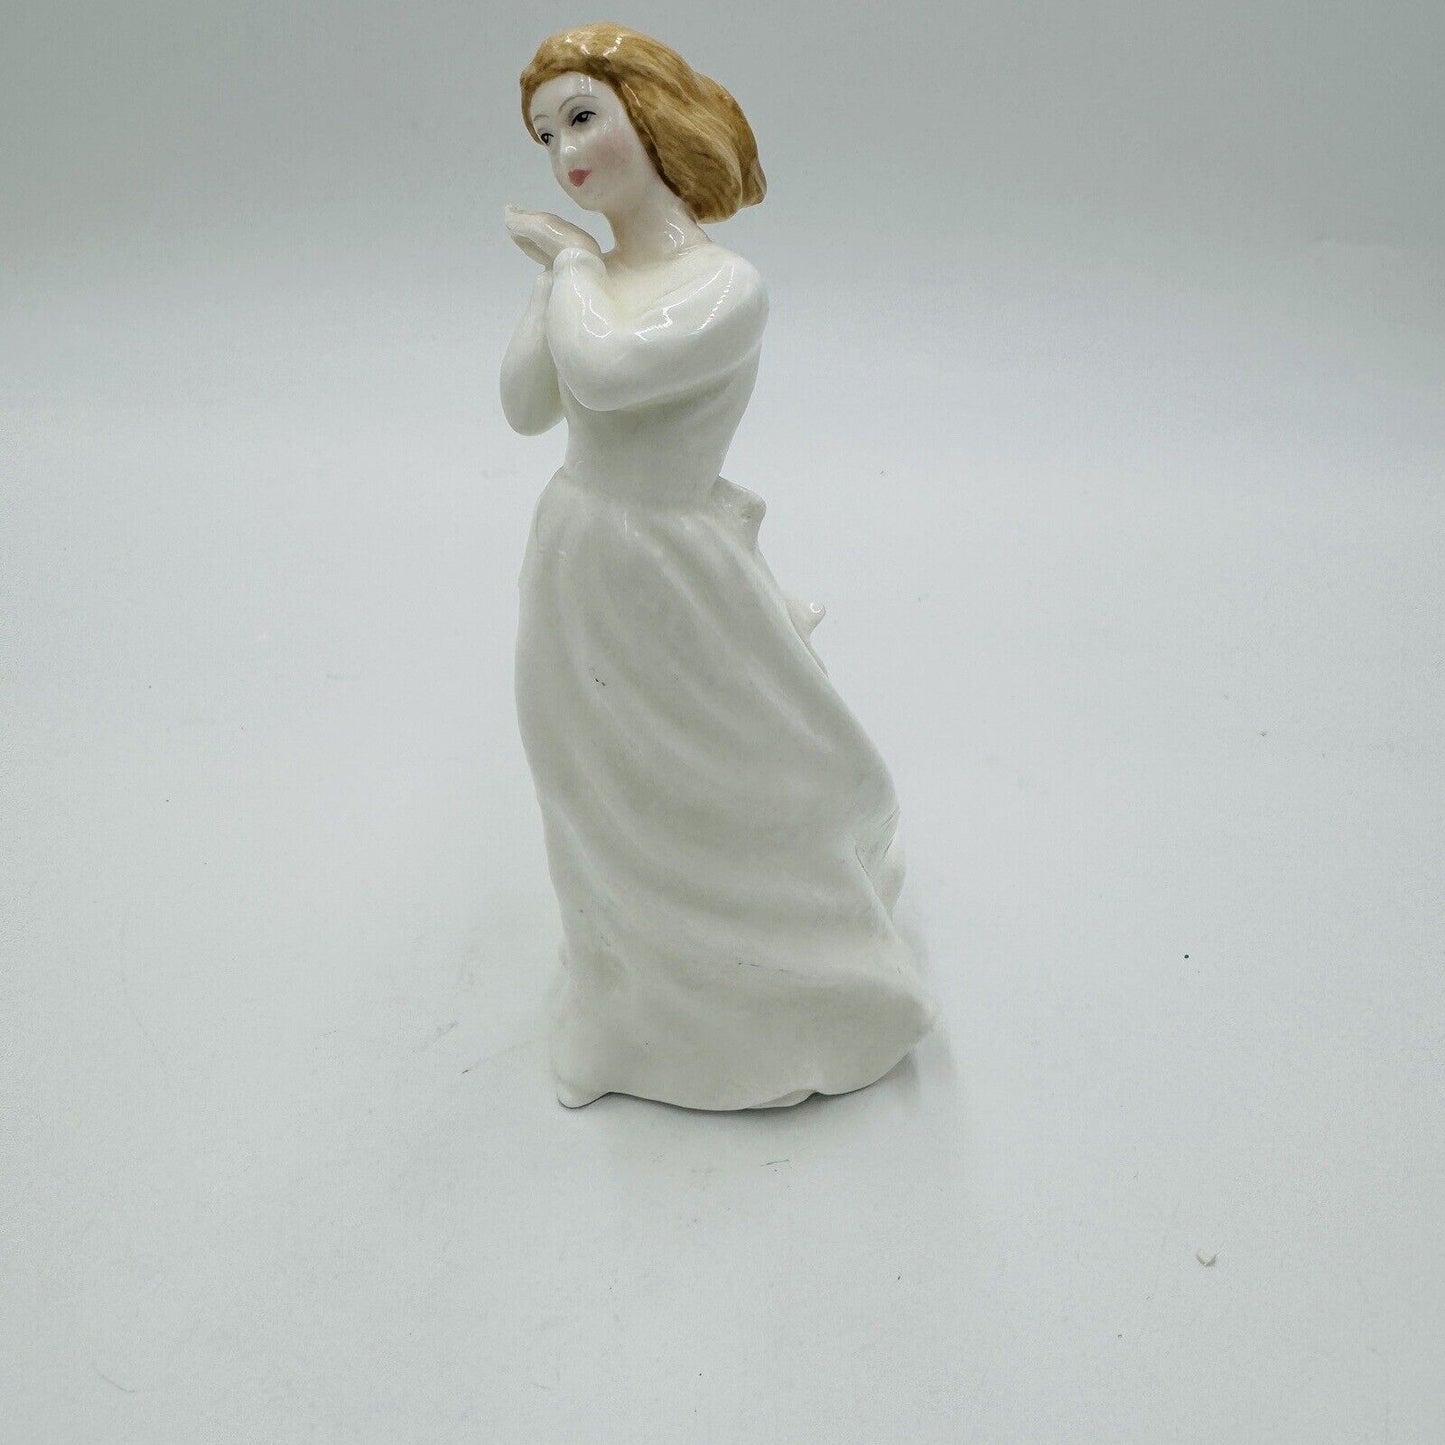 Royal Doulton “Sweet Dreams" Figurine HN3394 1992 Porcelain England White 5.5"